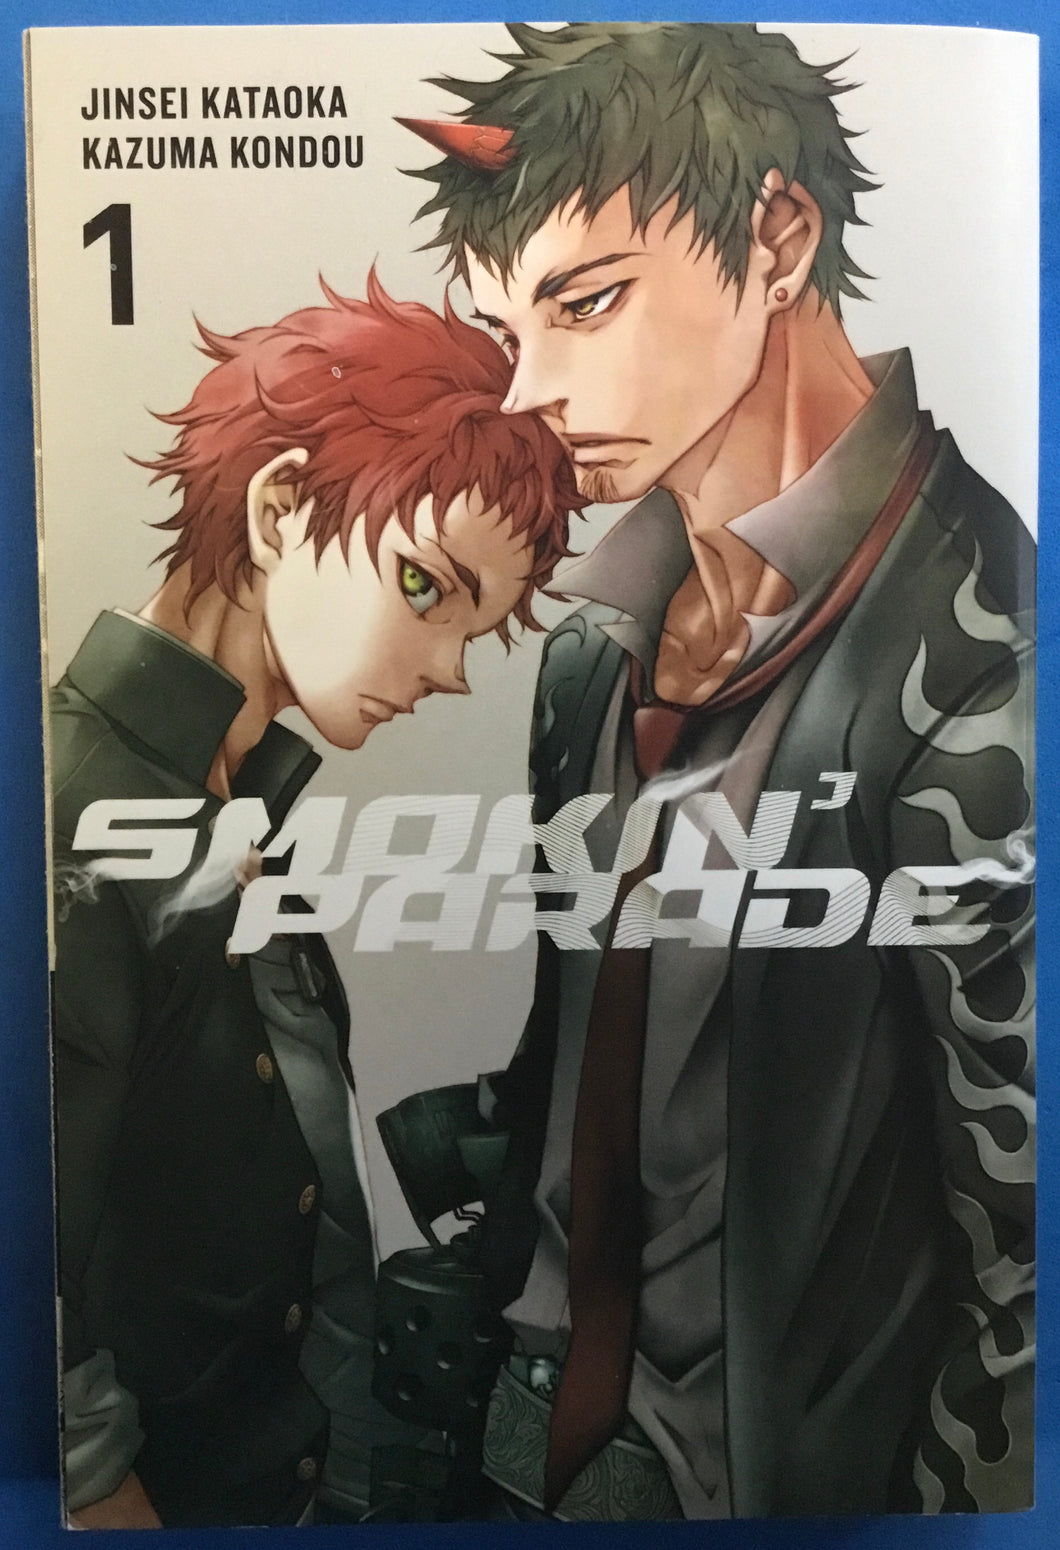 Smokin ’ Parade Volume 1 by Jinsei Kataoka 2017 Yen Press